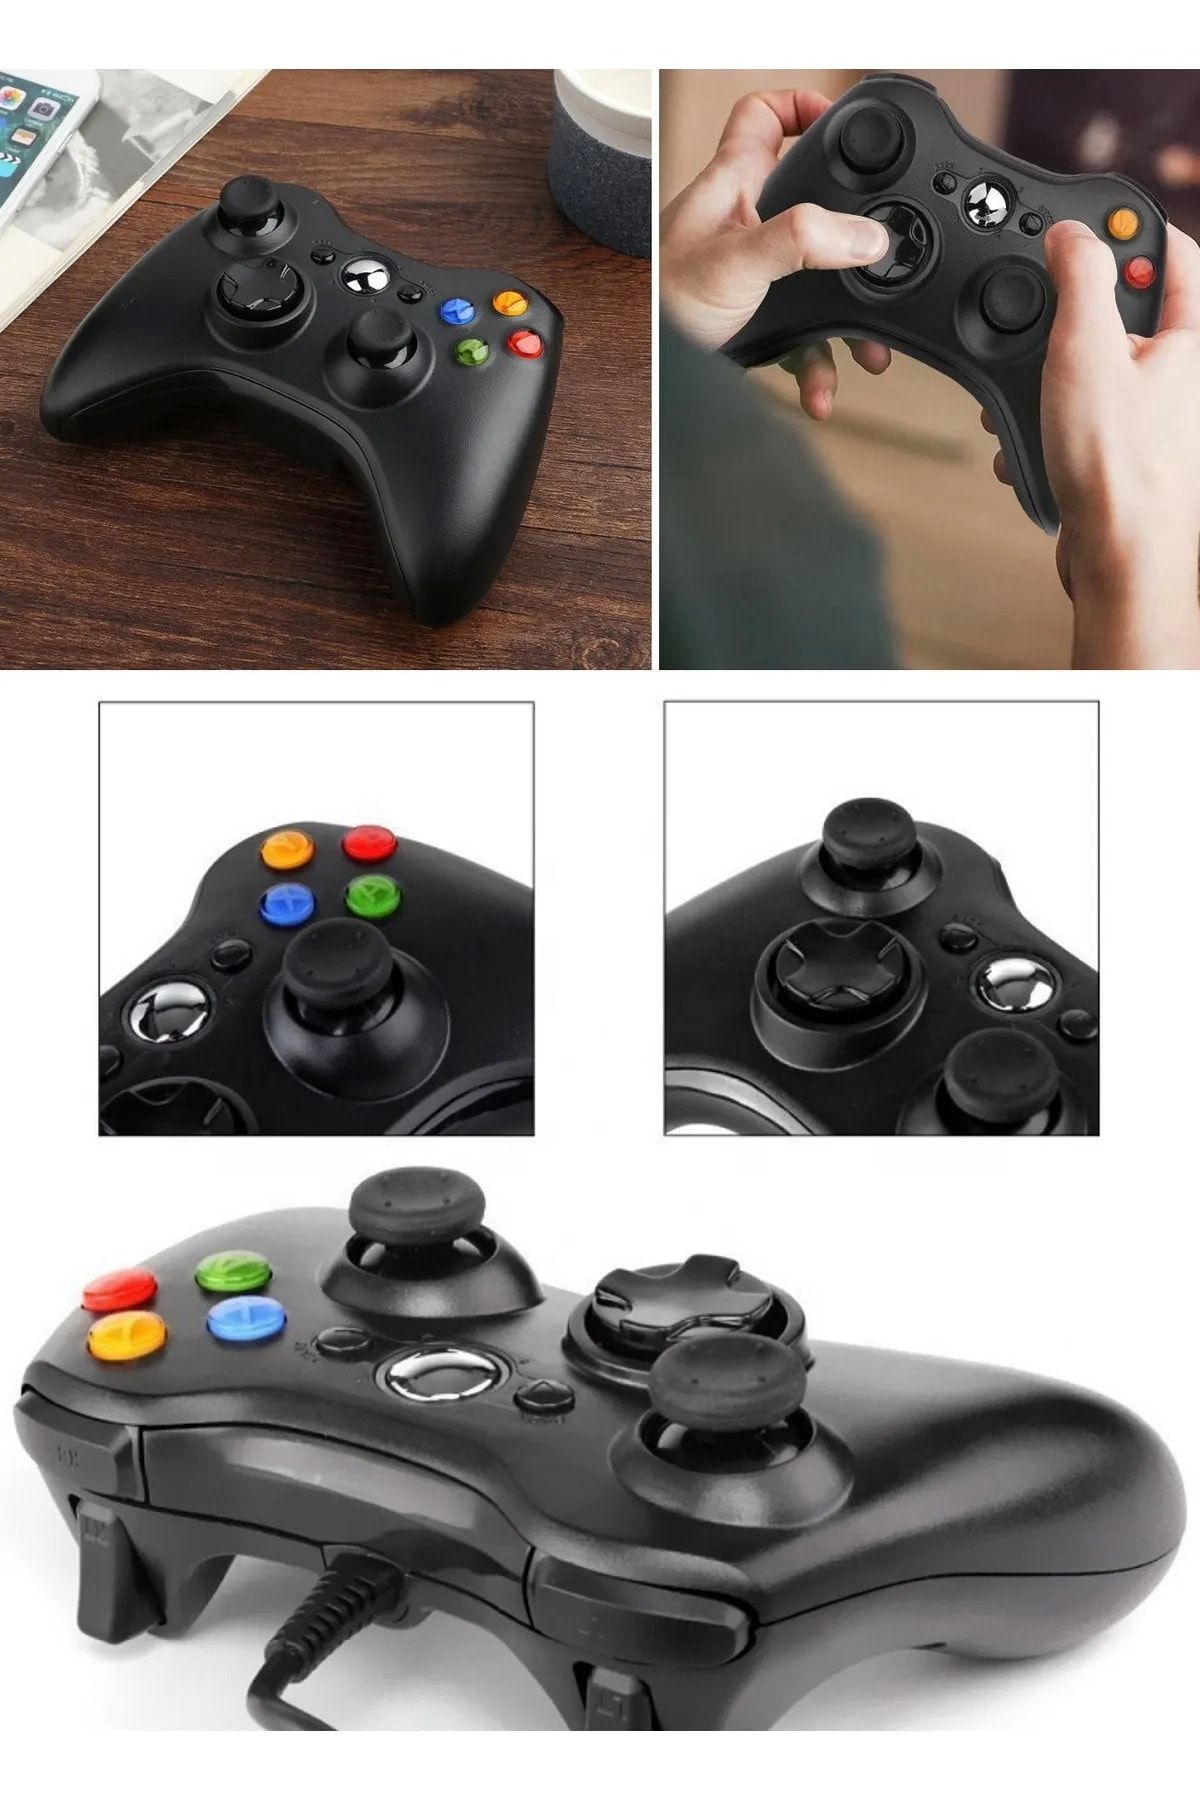 Бюджетный геймпад. Геймпад проводной Controller Black (Xbox 360). Джойстик Xbox 360 проводной. Проводной USB геймпад Xbox 360. Геймпад Xbox 360 чёрный проводной.